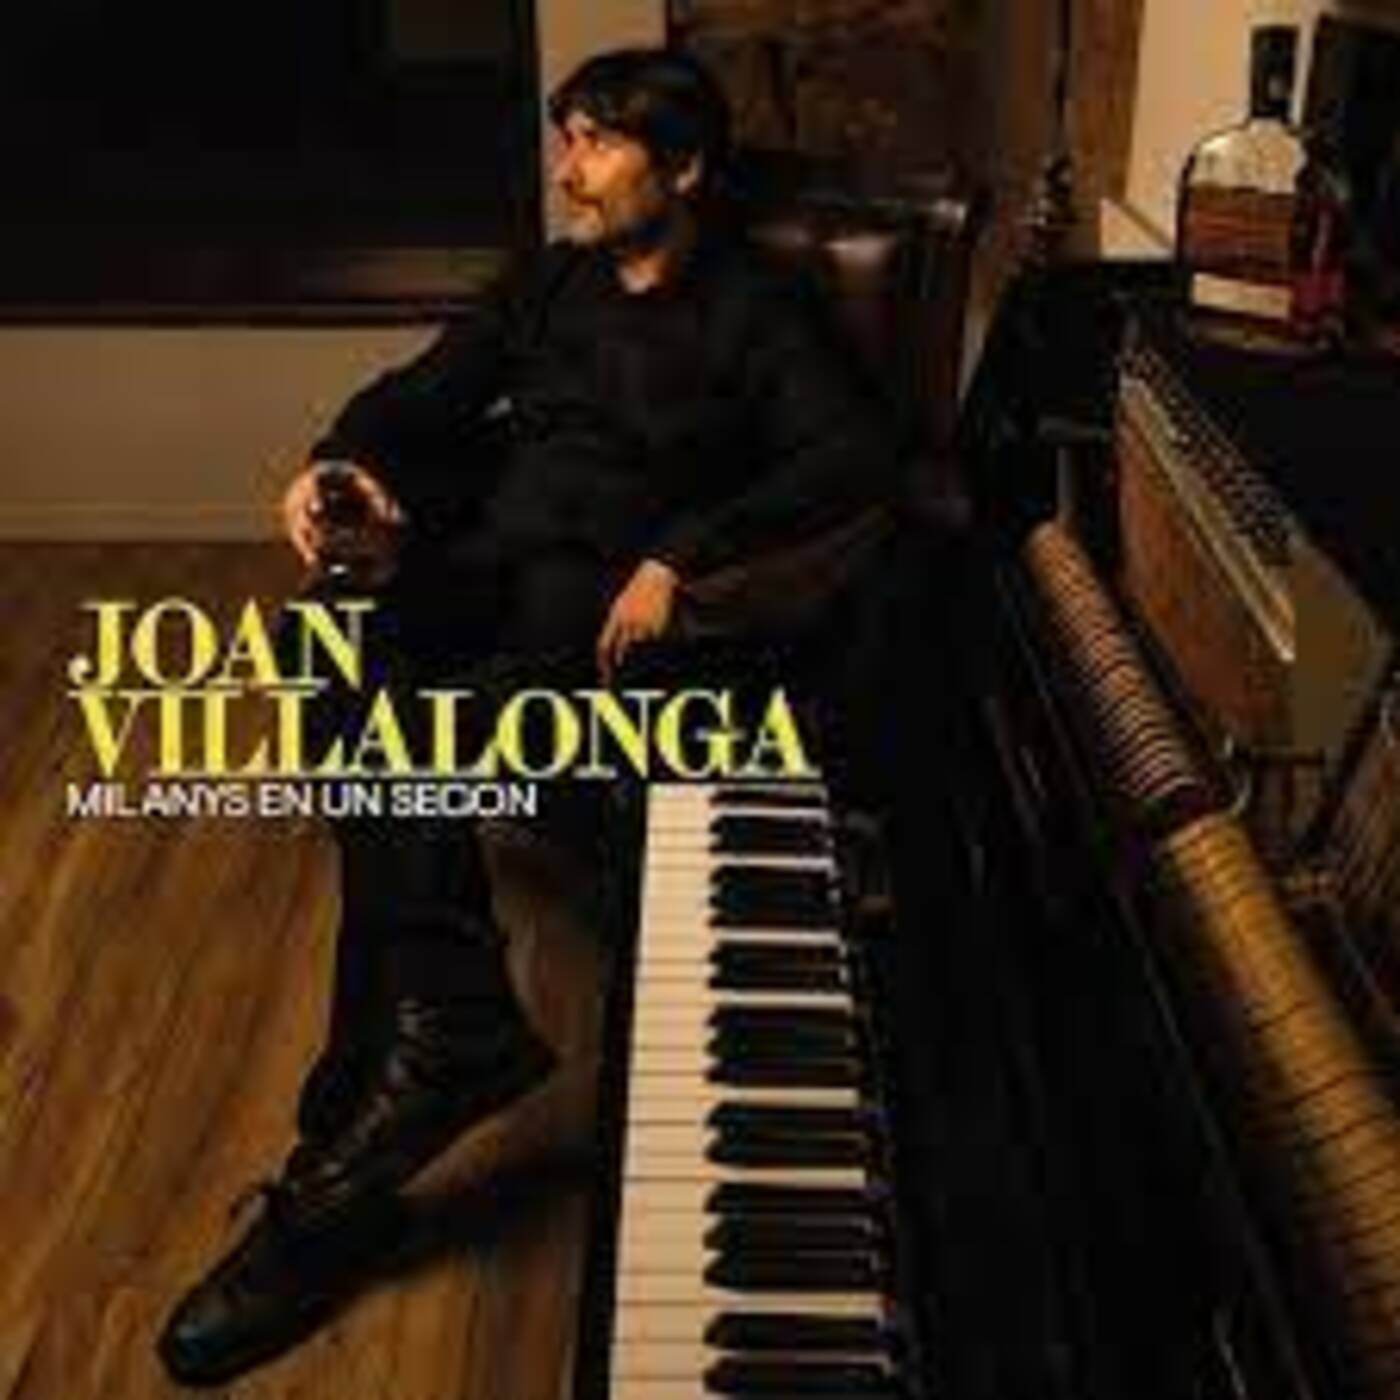 Joan Villalonga - Mil anys en un segon | musica en valencià